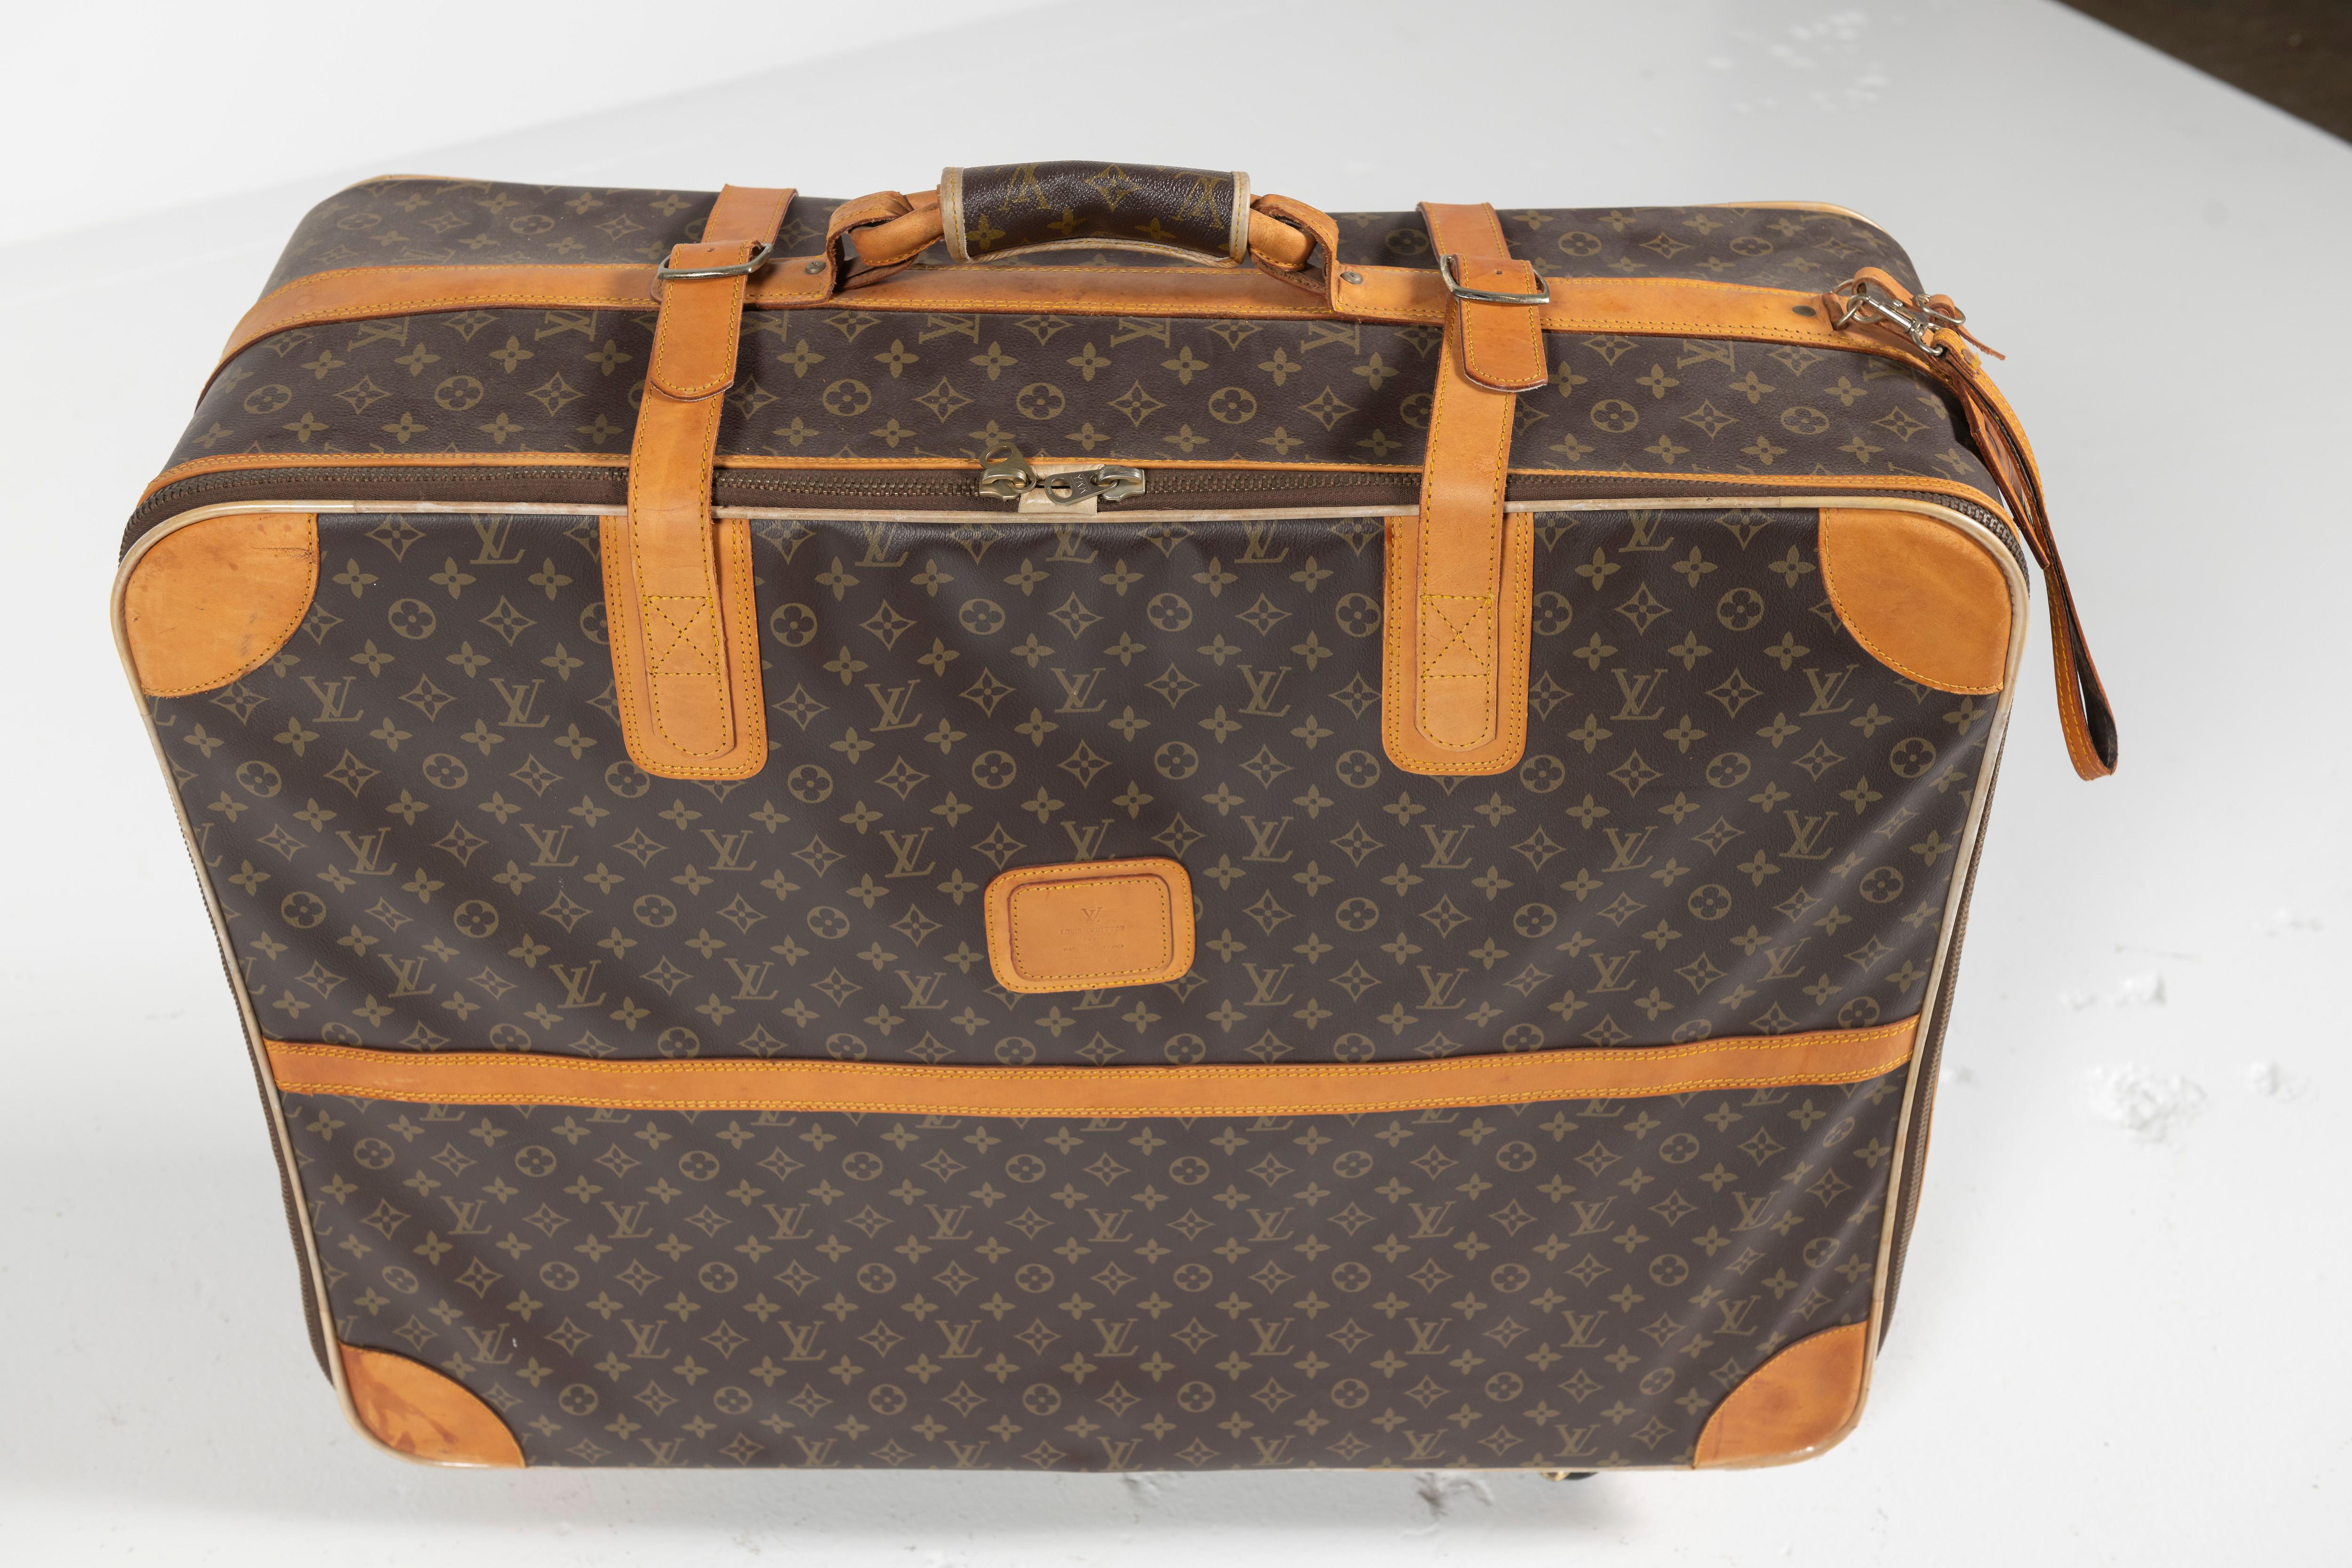 Vintage Louis Vuitton Suitcase, Monogrammed Coated Canvas, Large-Sized For Sale 2